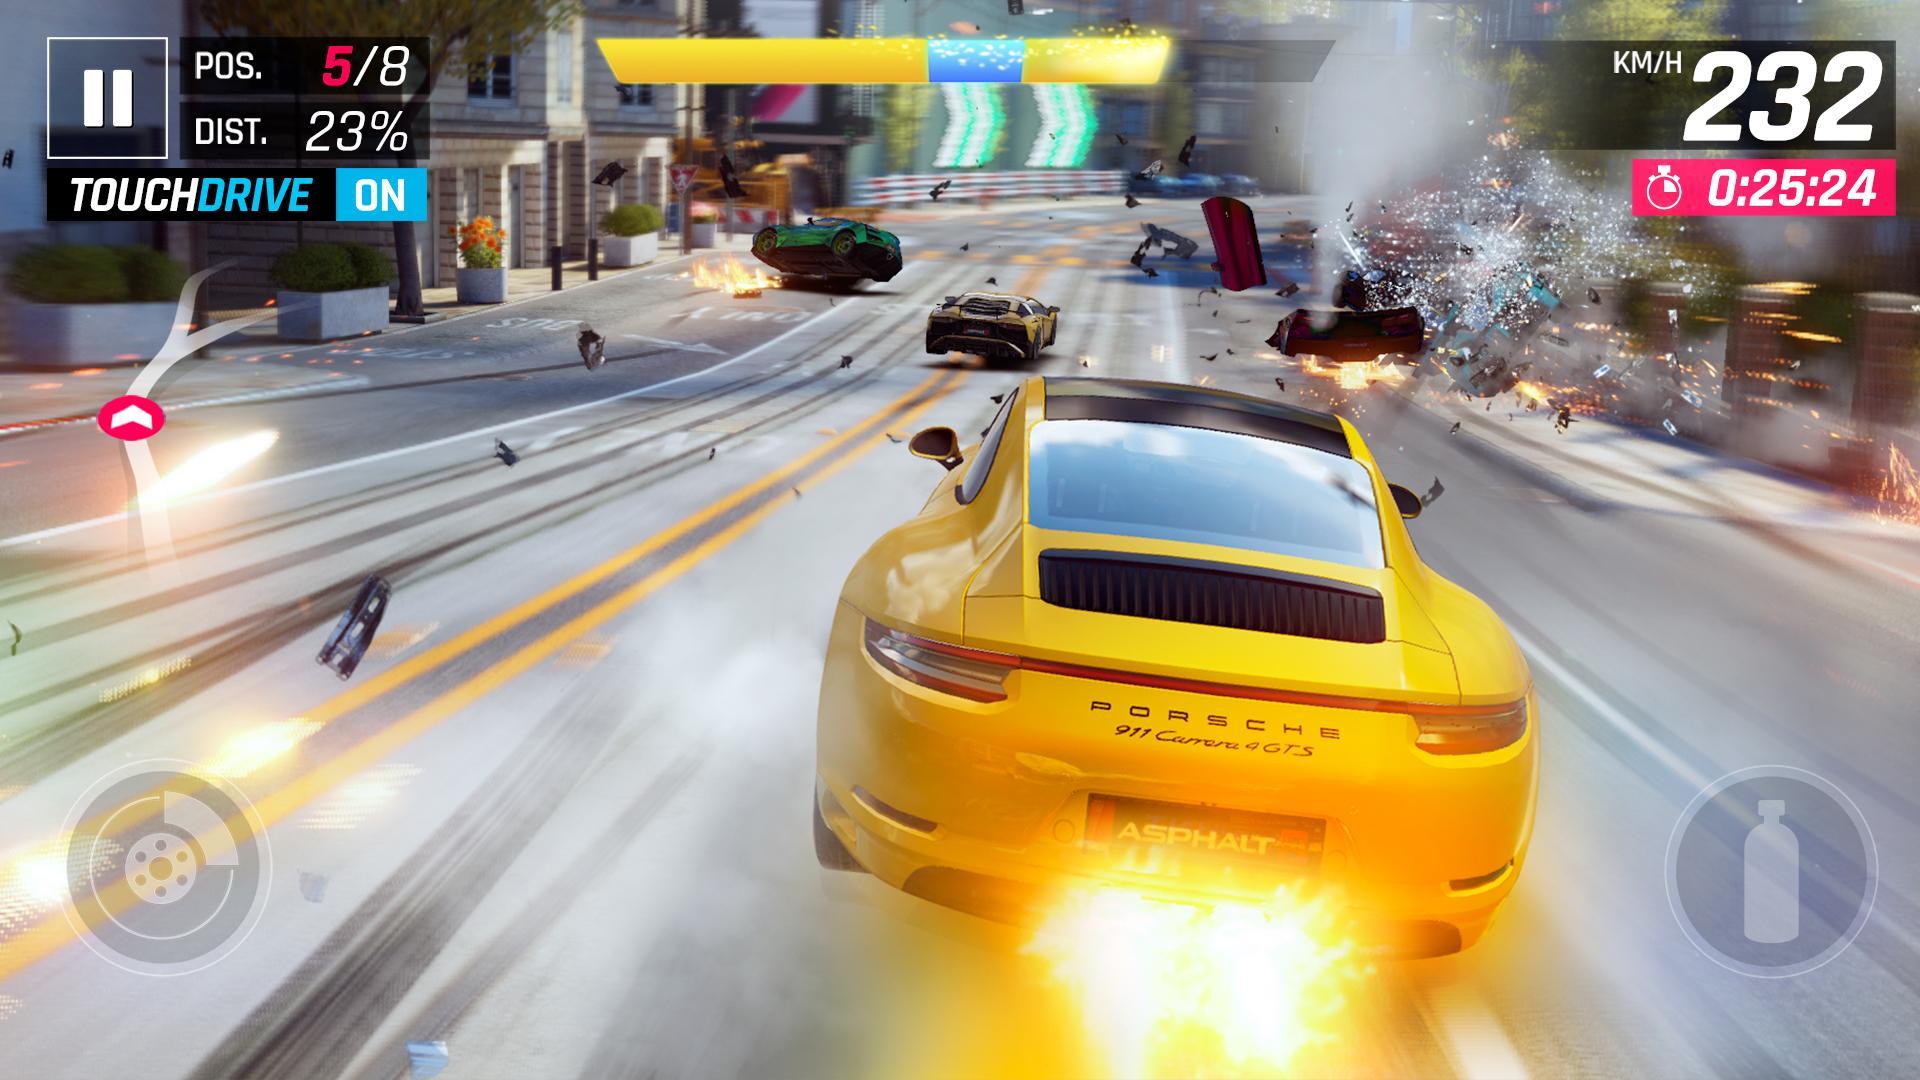 Asphalt 9 Legends - Epic Car Action Racing Game 2.5.3a Screenshot 6